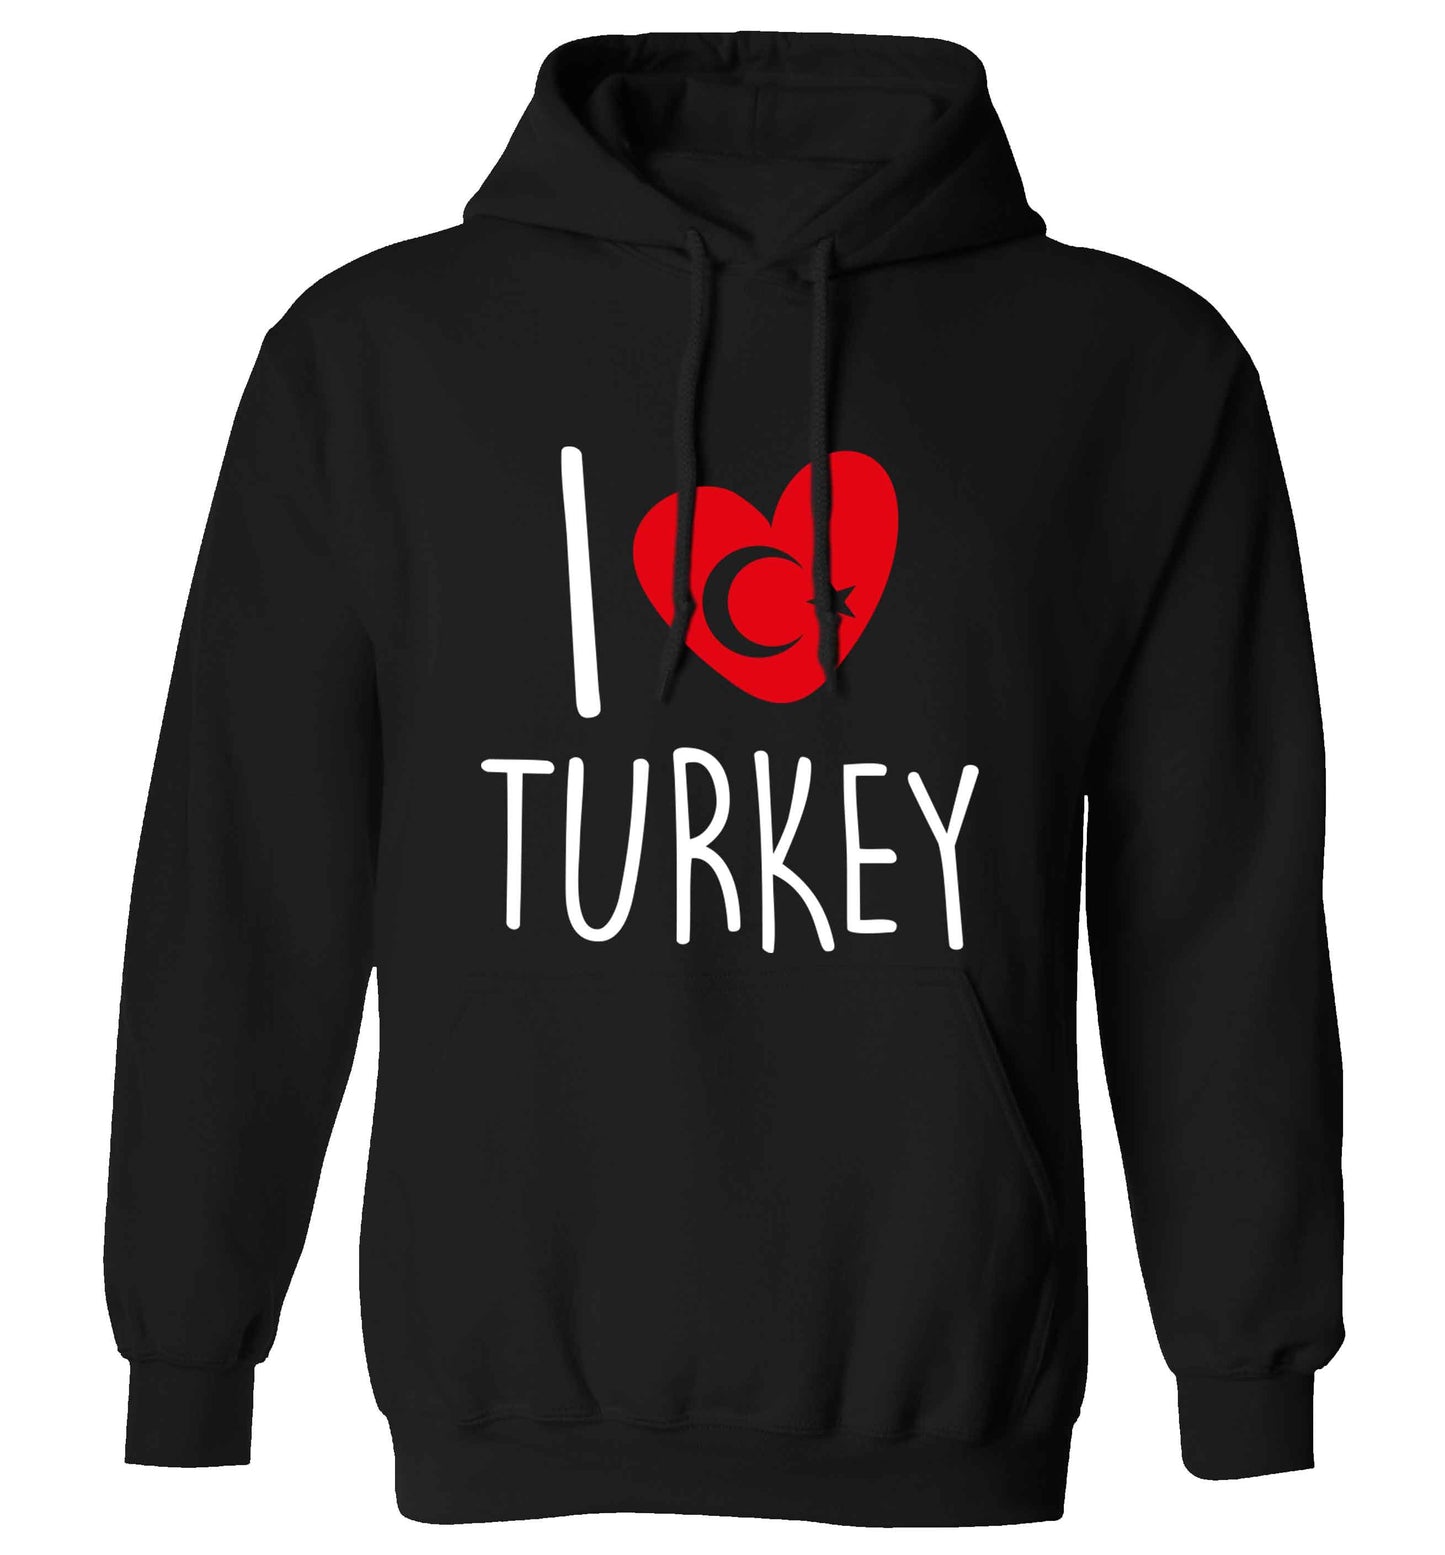 I love Turkey adults unisex black hoodie 2XL